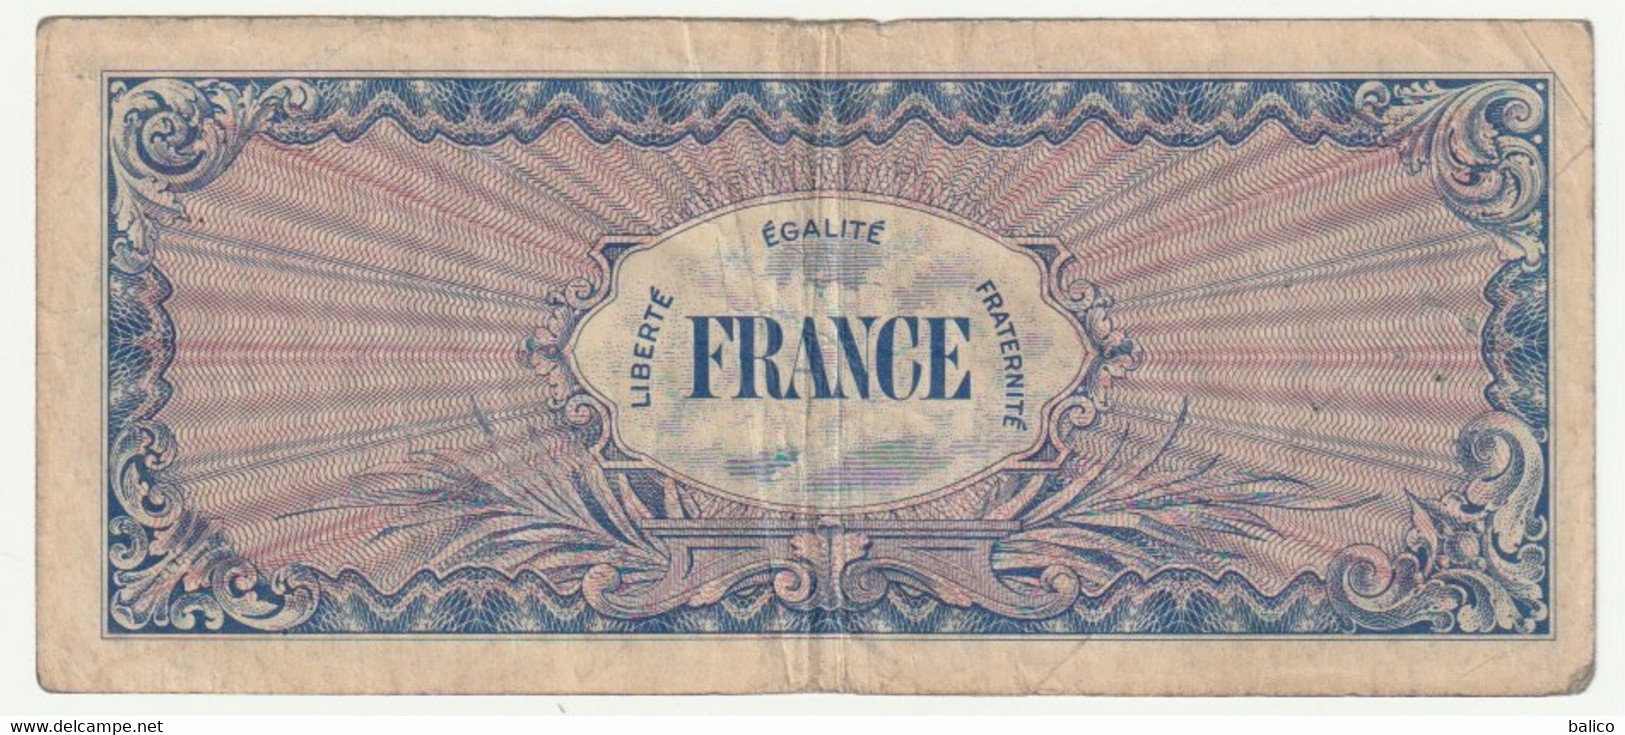 France, 100 Francs   1944   N° 26646422 - 1944 Drapeau/Francia